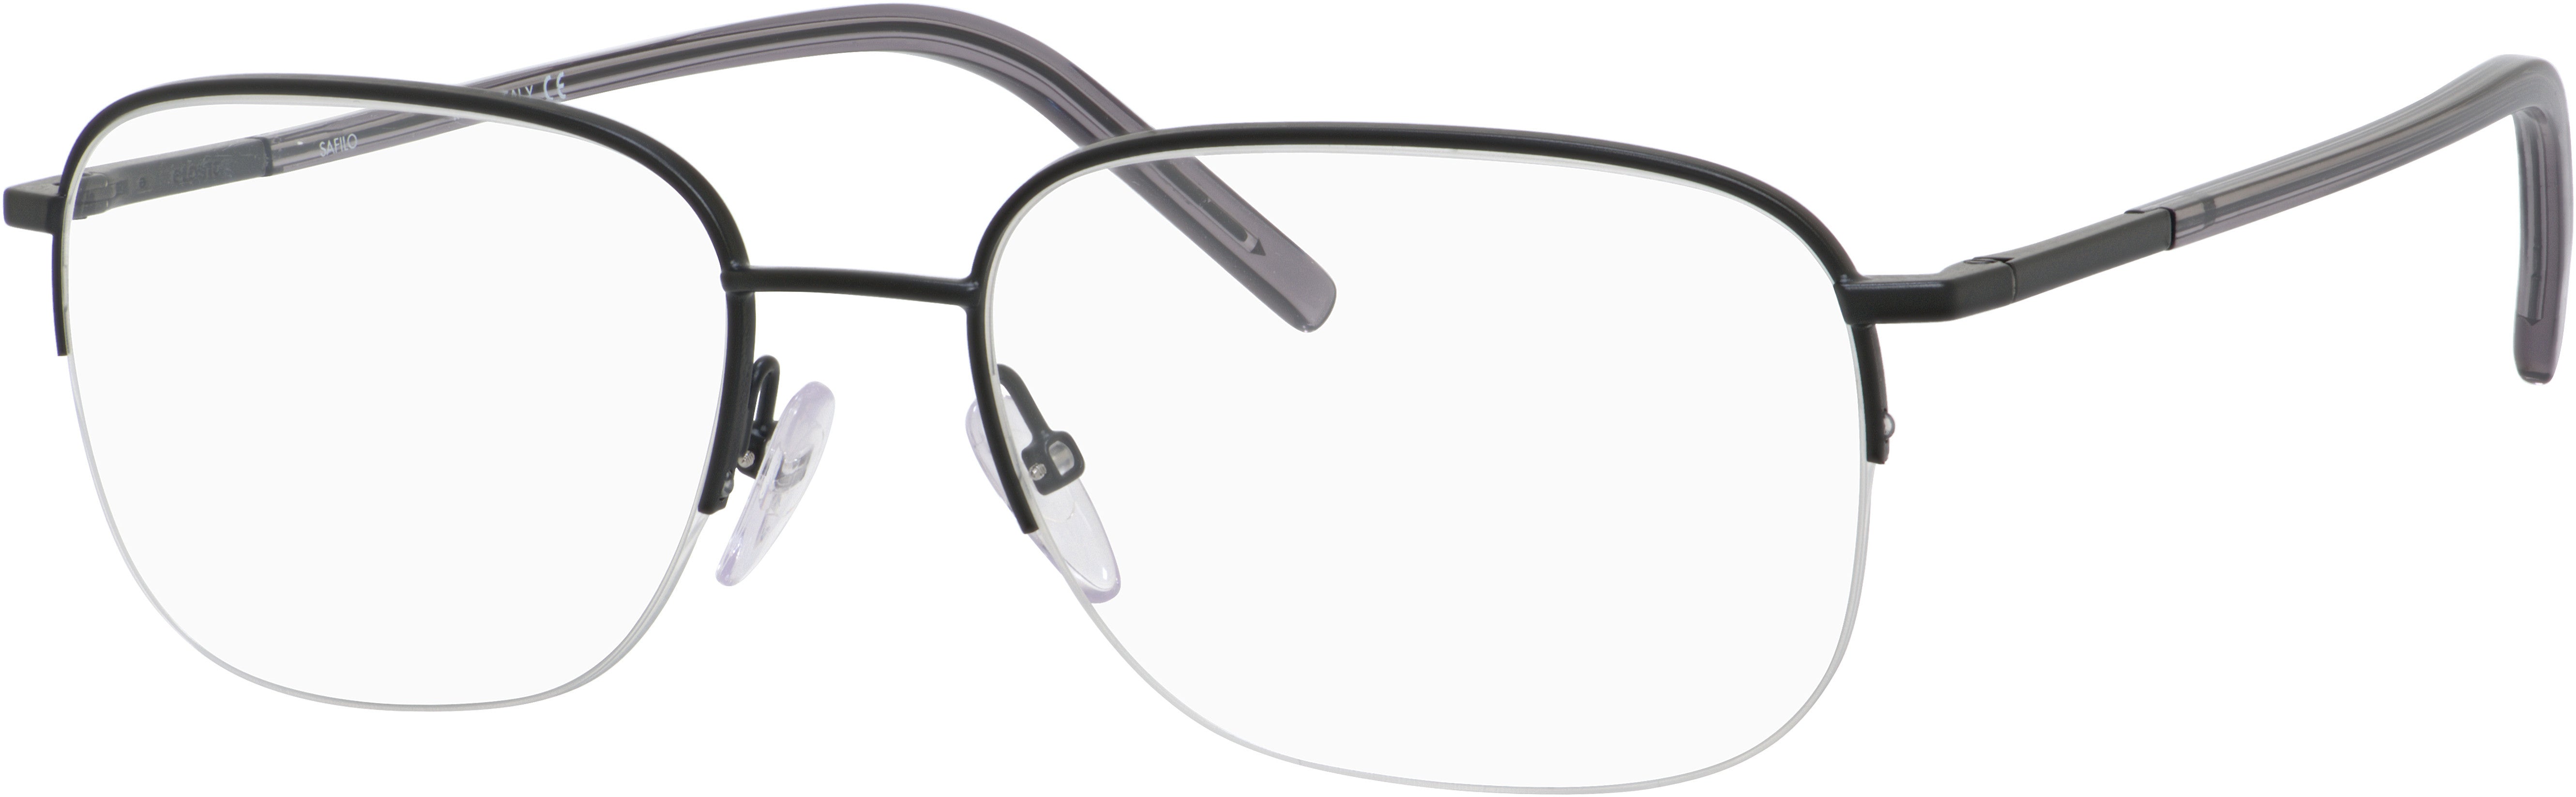  Elasta 7220 Rectangular Eyeglasses 0O6W-0O6W  Blrut Dark Gray (00 Demo Lens)